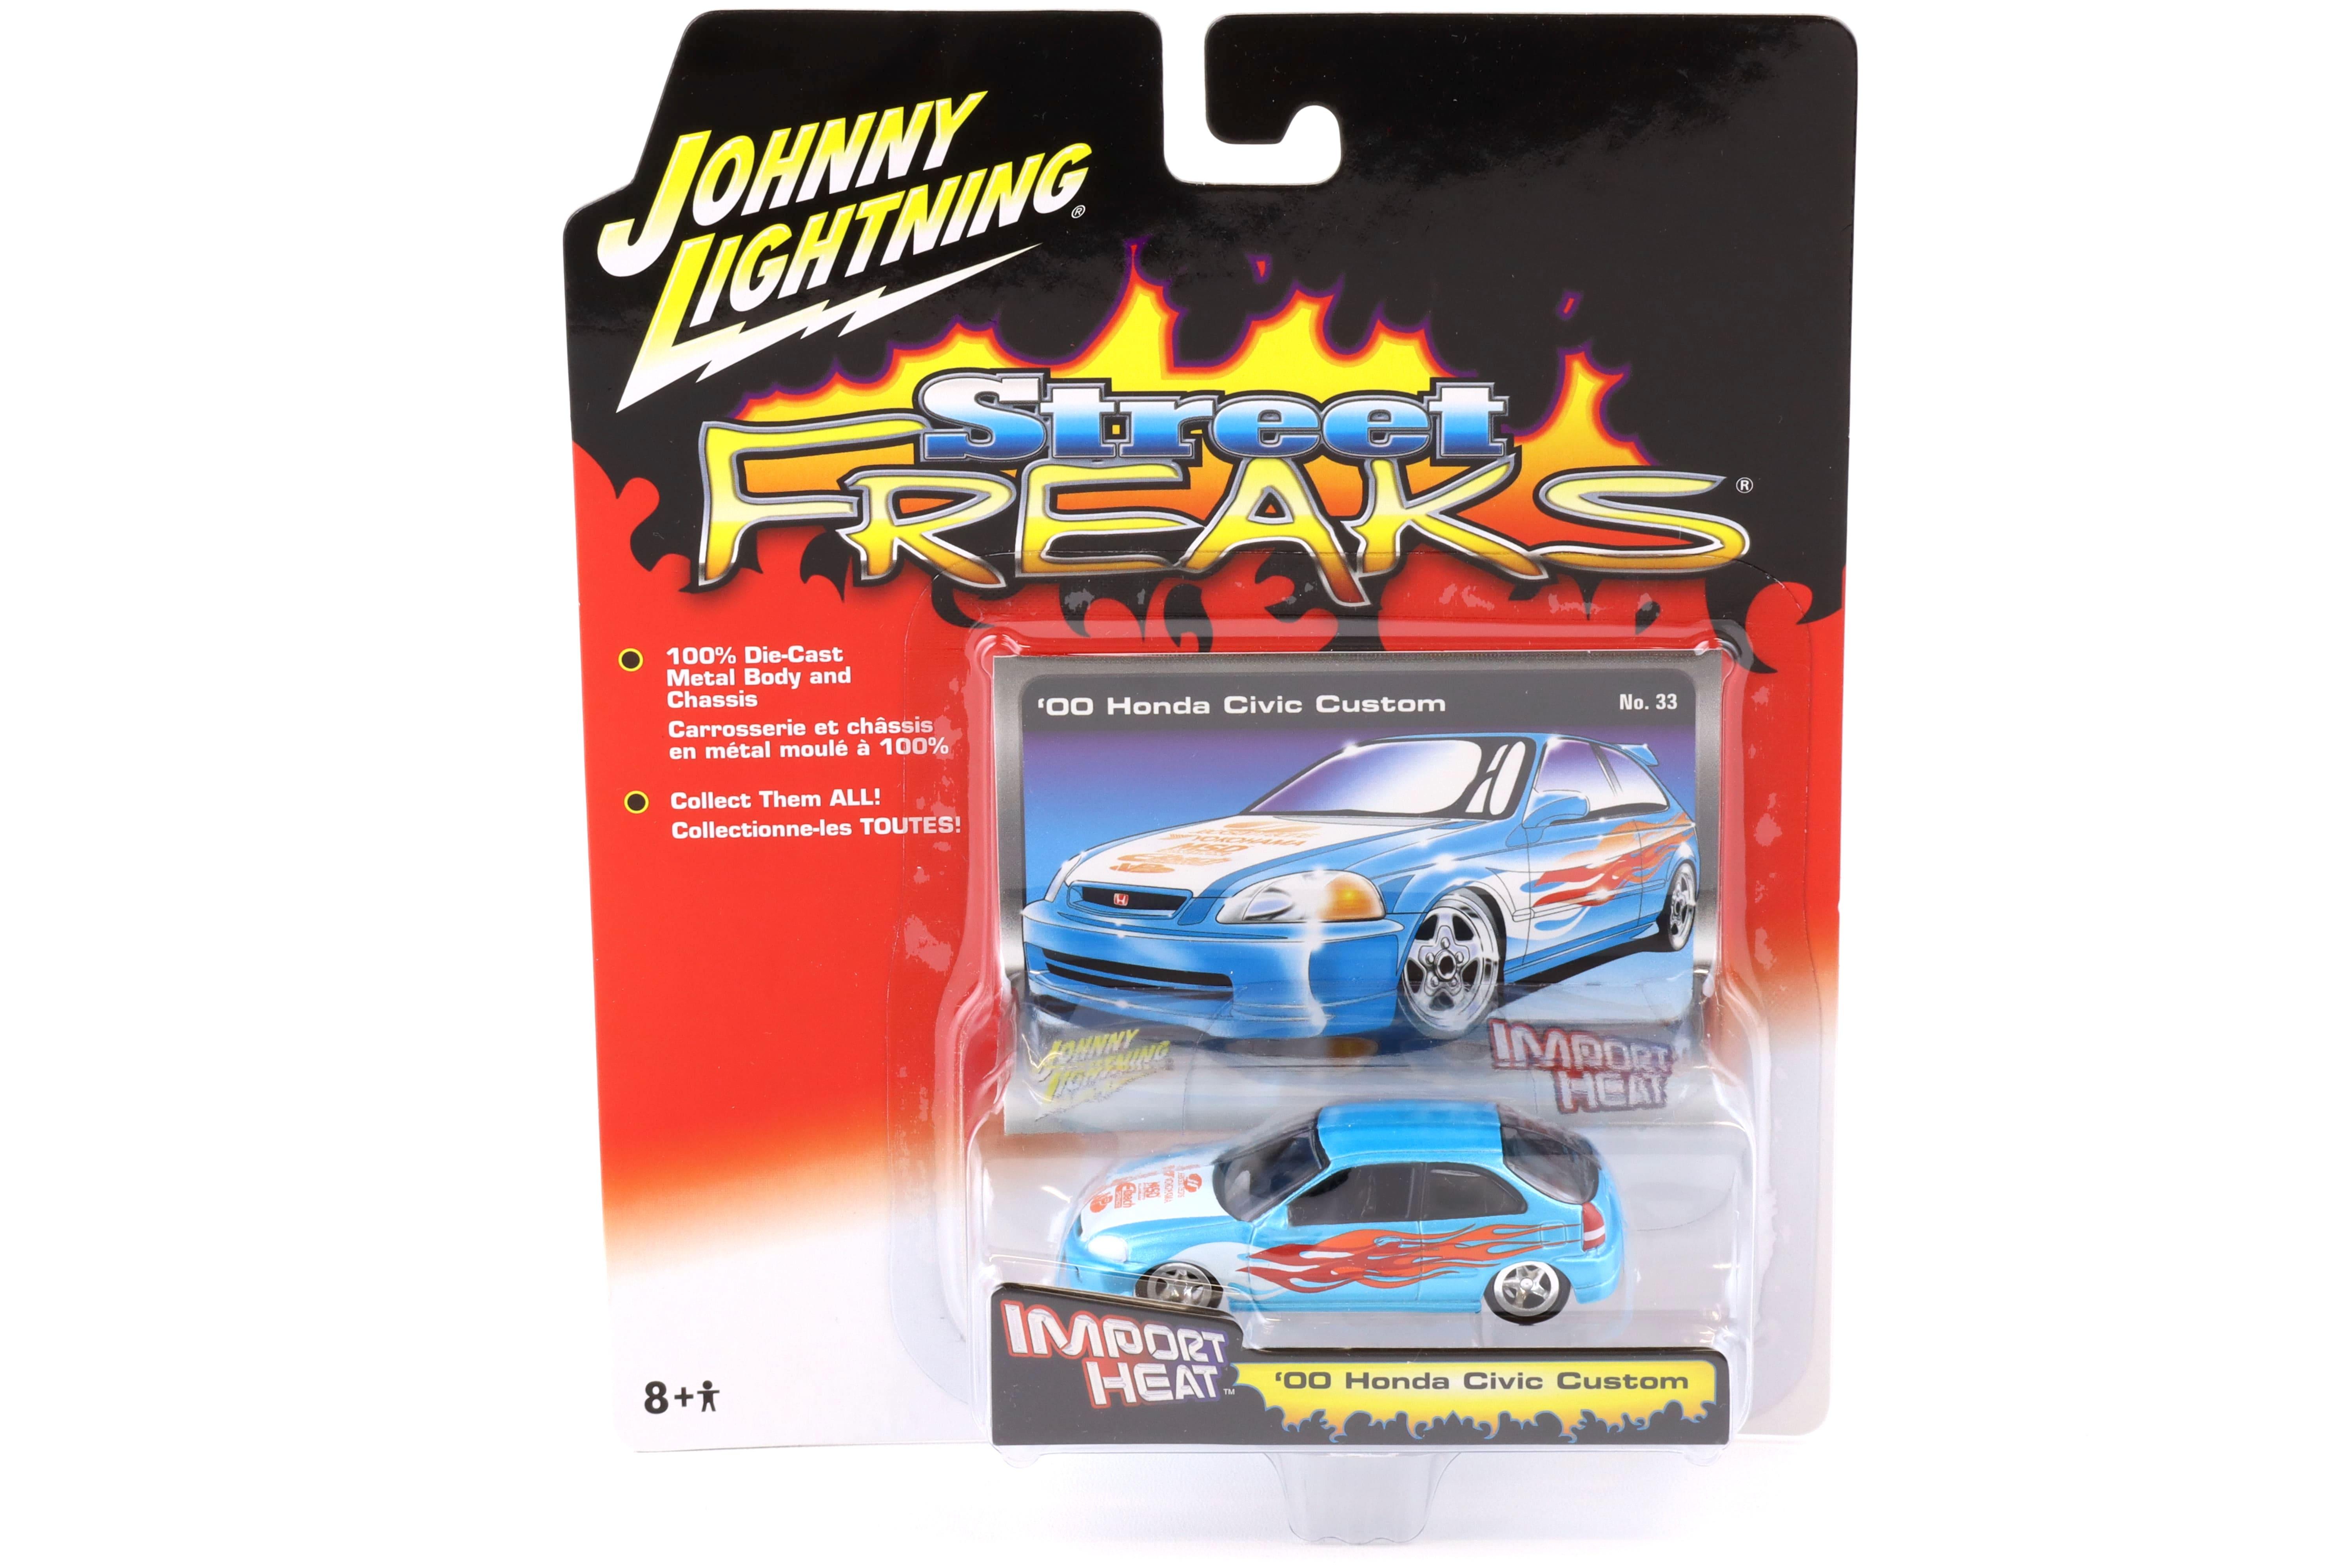 1:64 Johnny Lightning Street Freaks 50301B Import Heat 2000 Honda Civic Custom blue